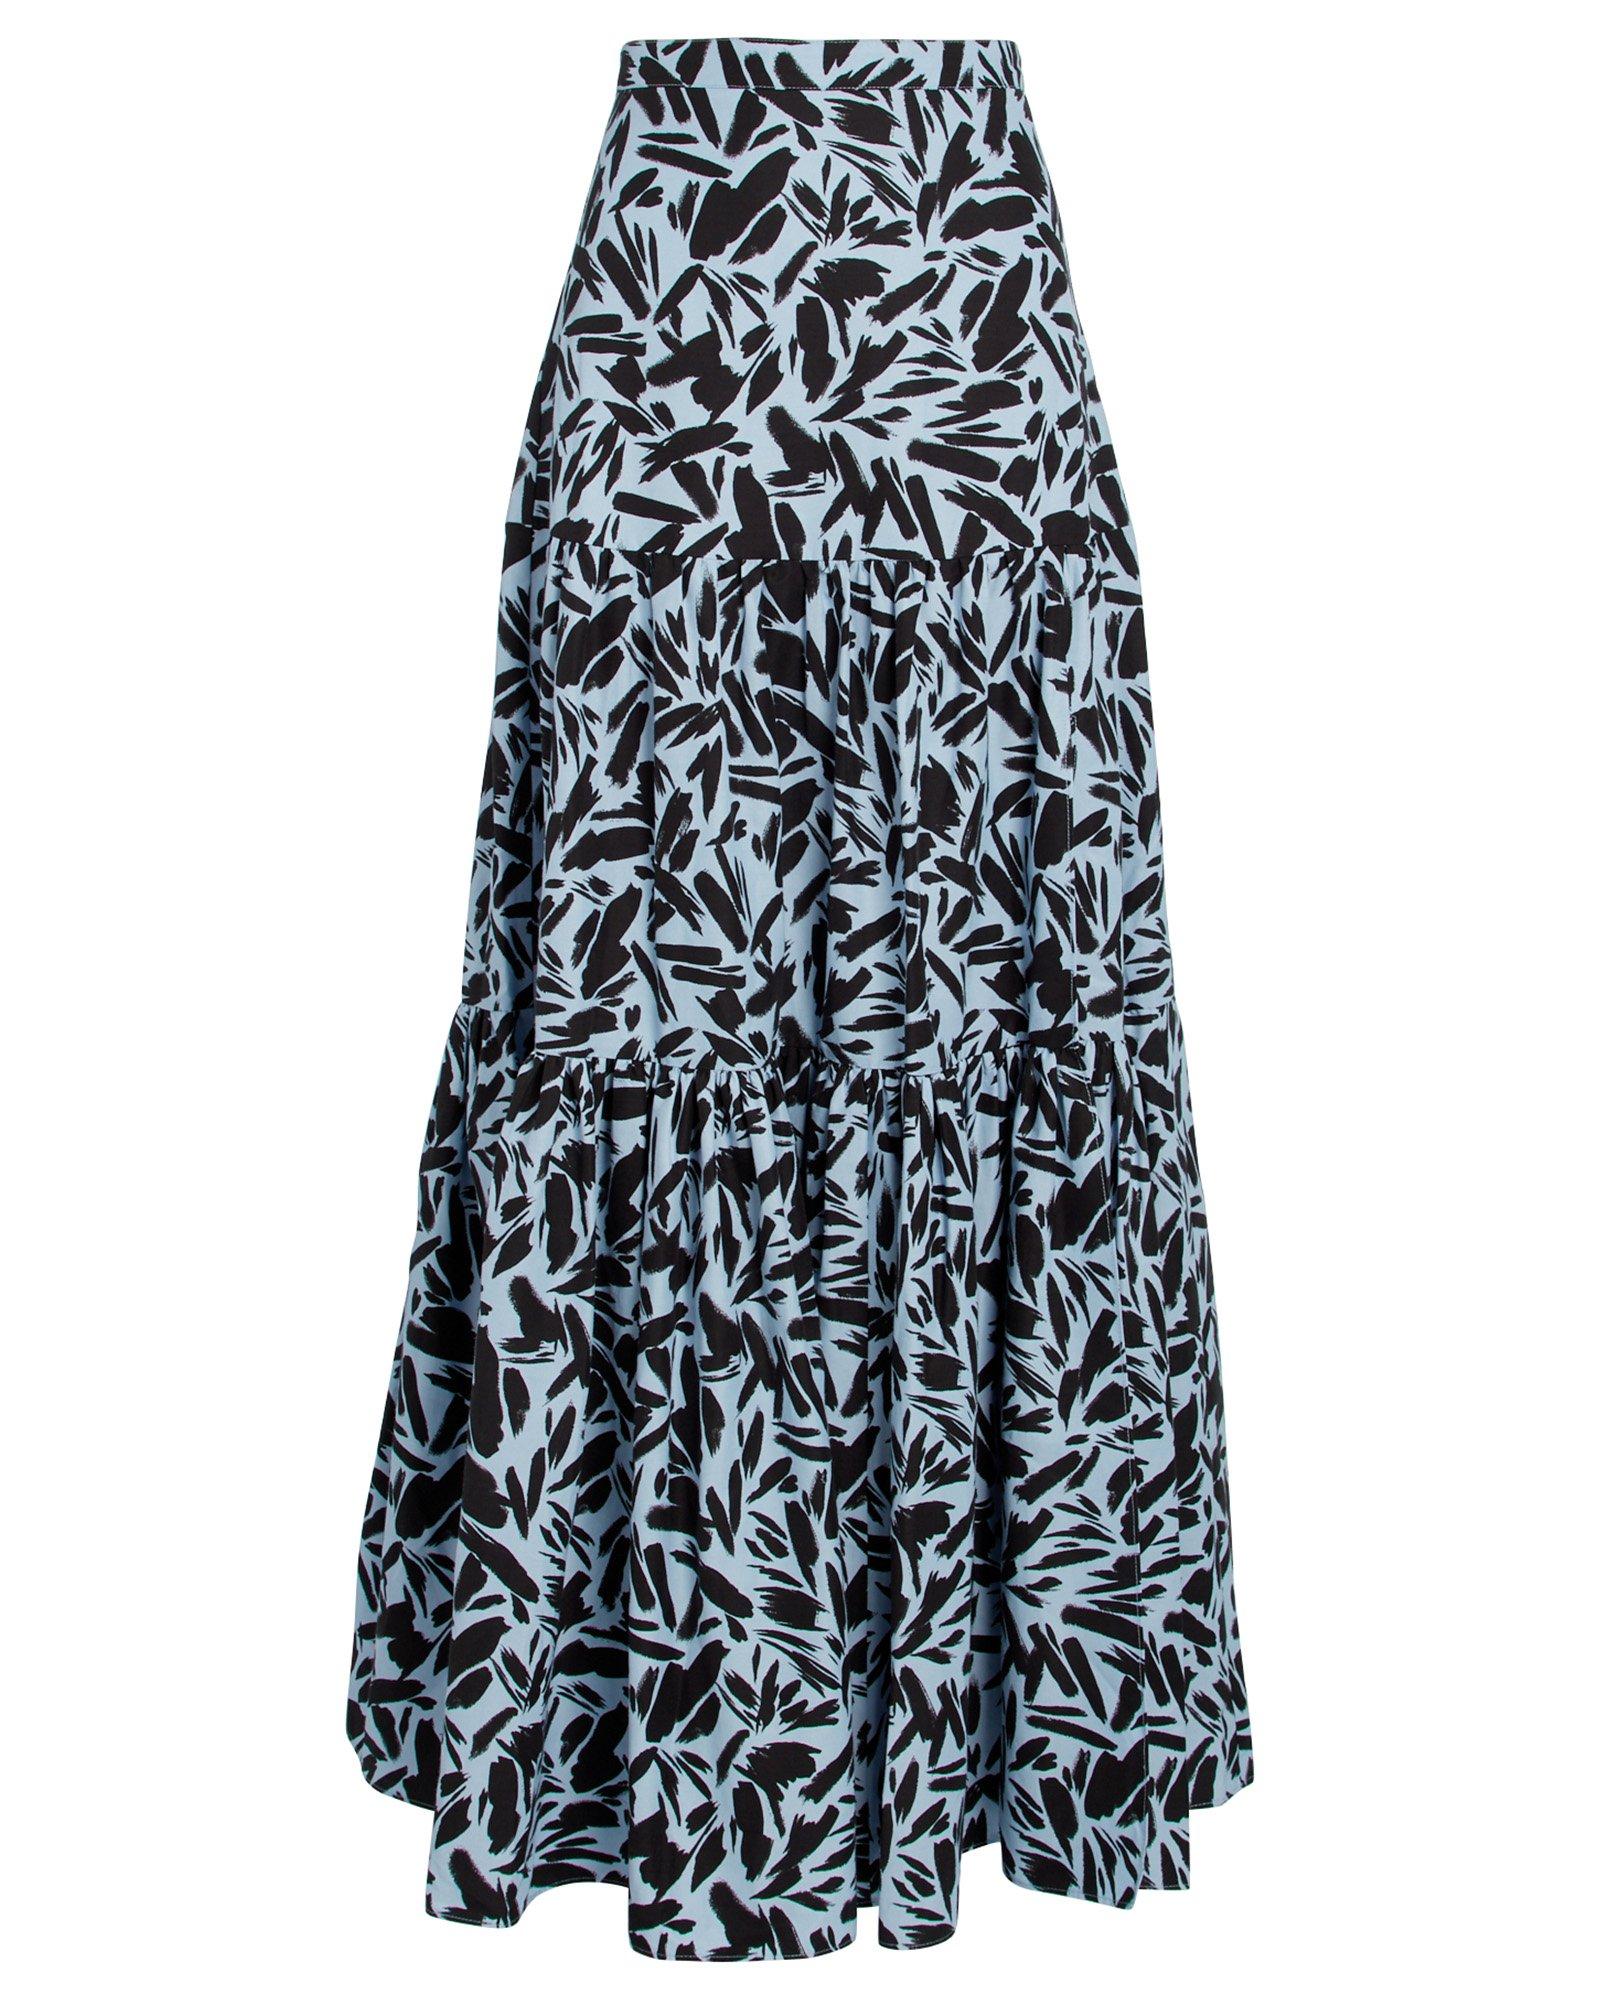 Veronica Beard Cotton Serence Faille Maxi Skirt in Blue - Lyst